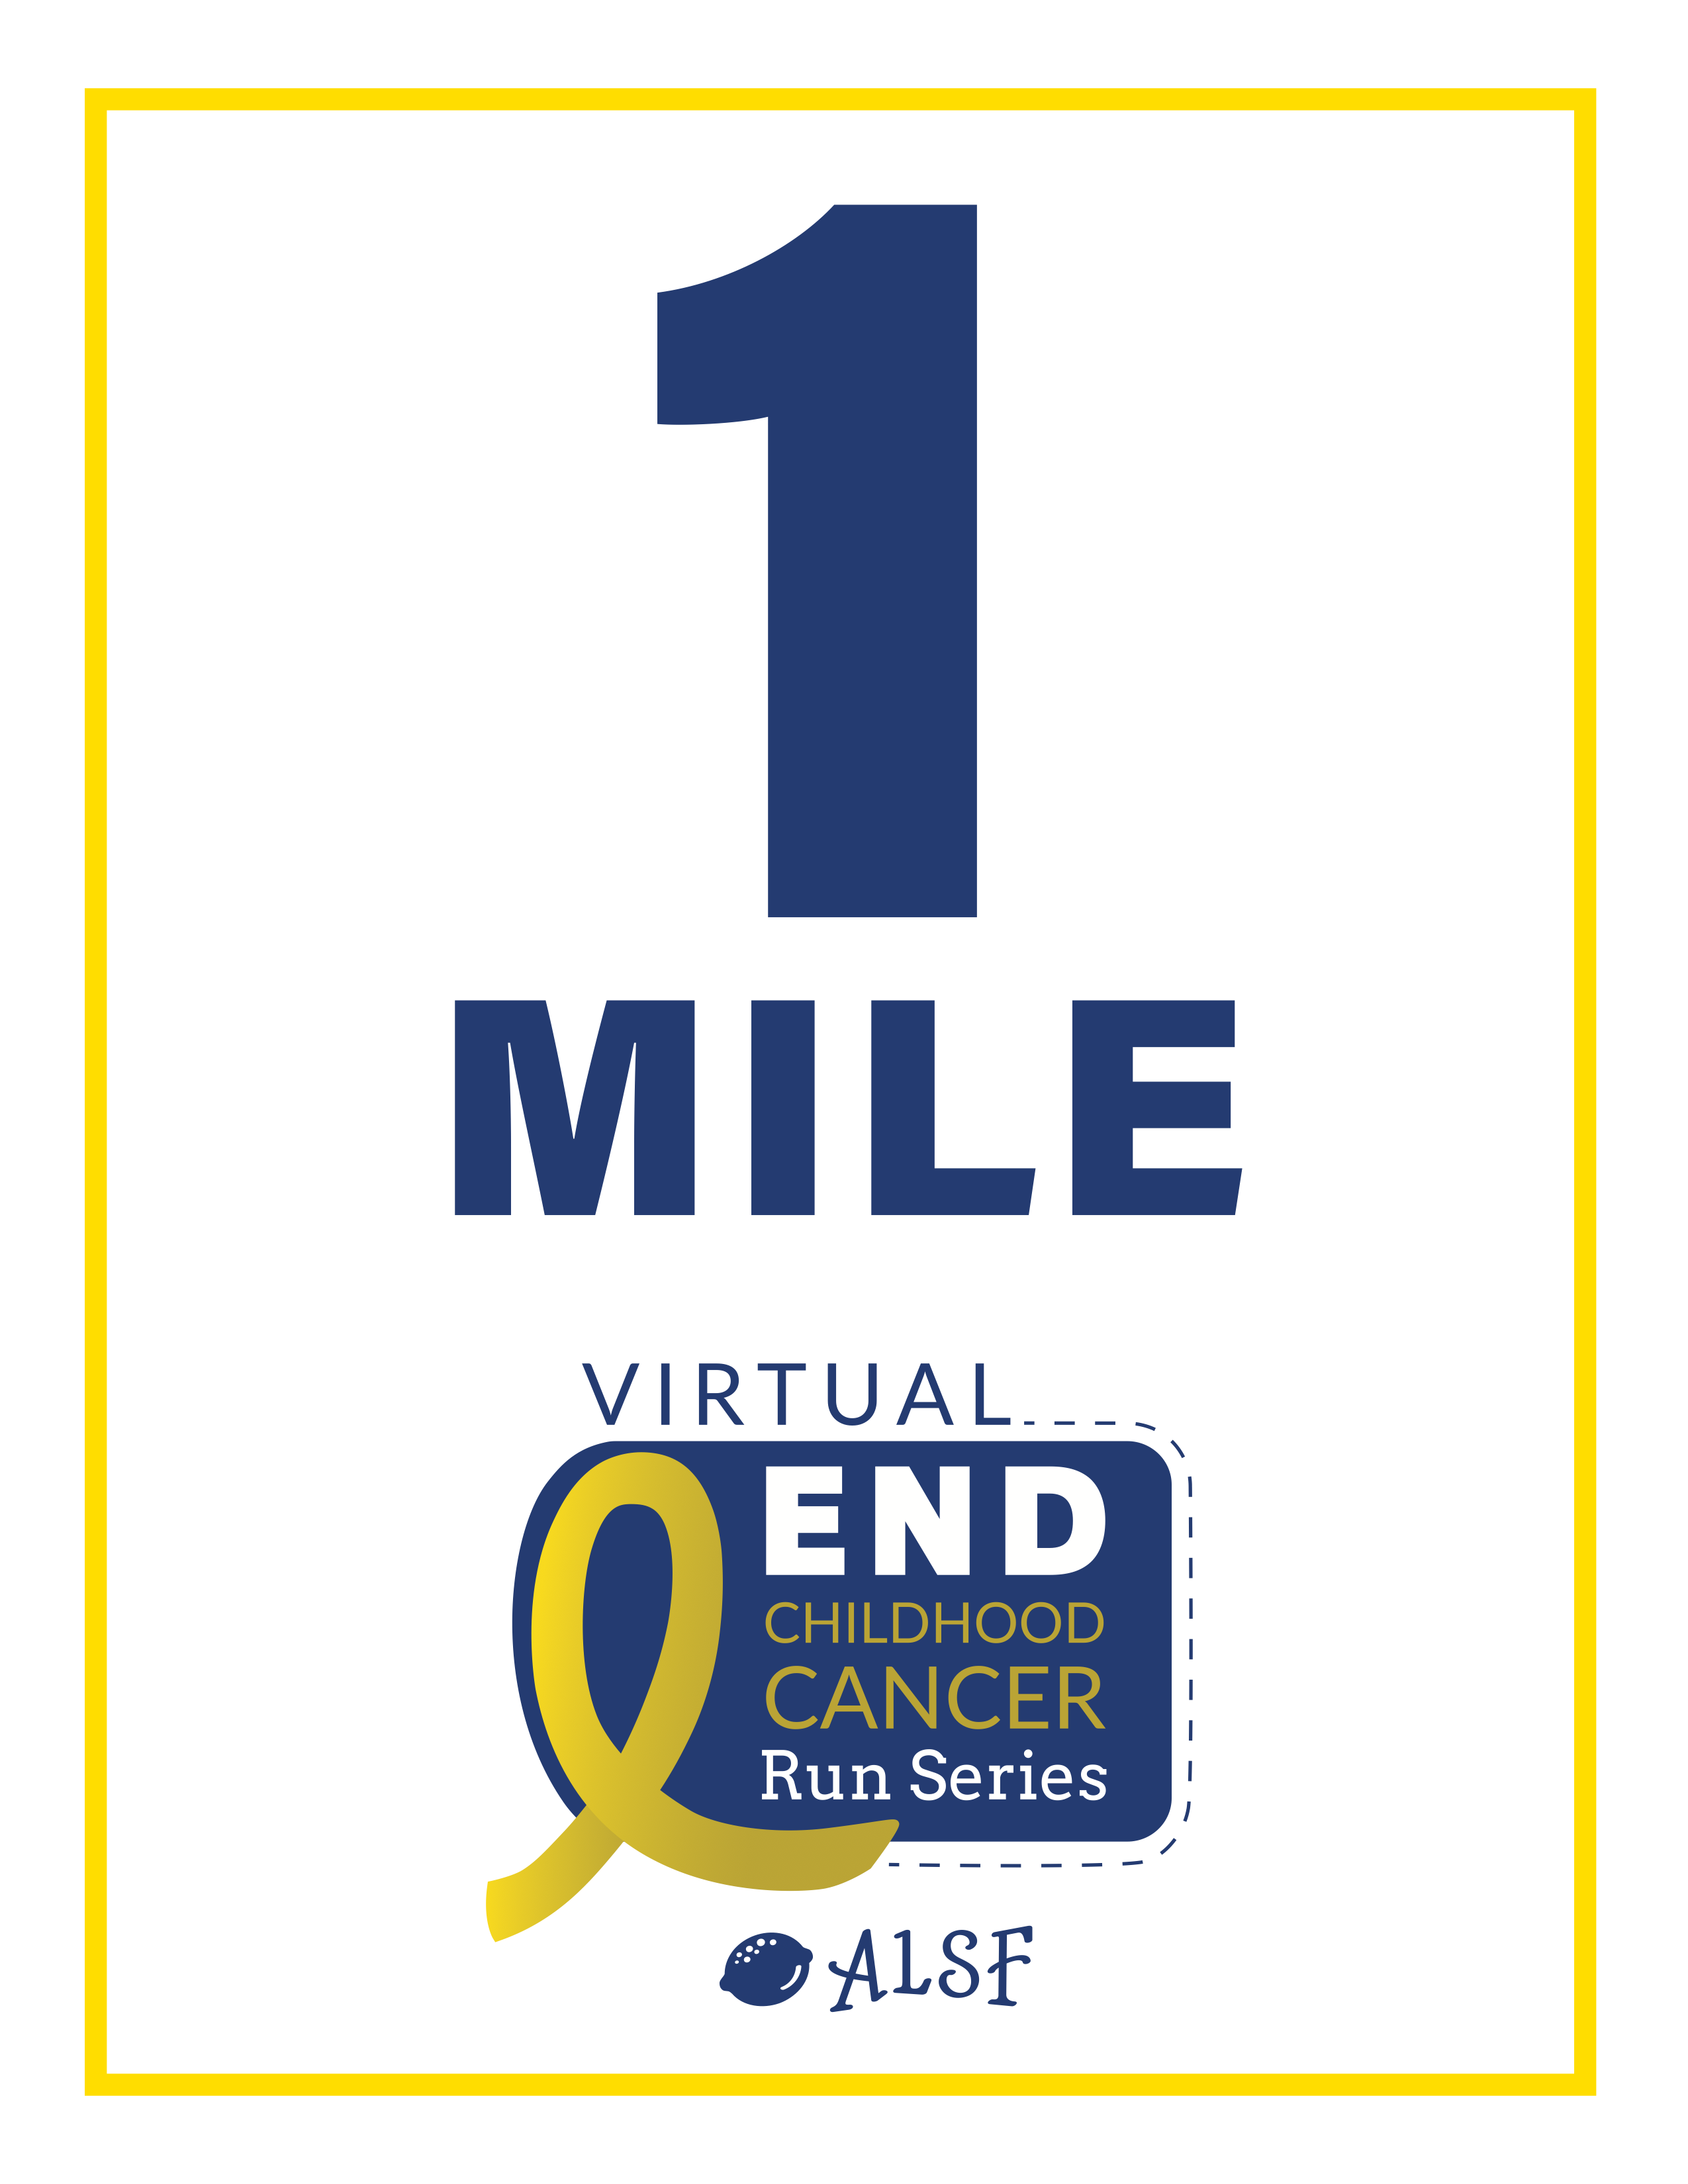 Virtual End Childhood Cancer Run Series Mile Marker - 1 Mile